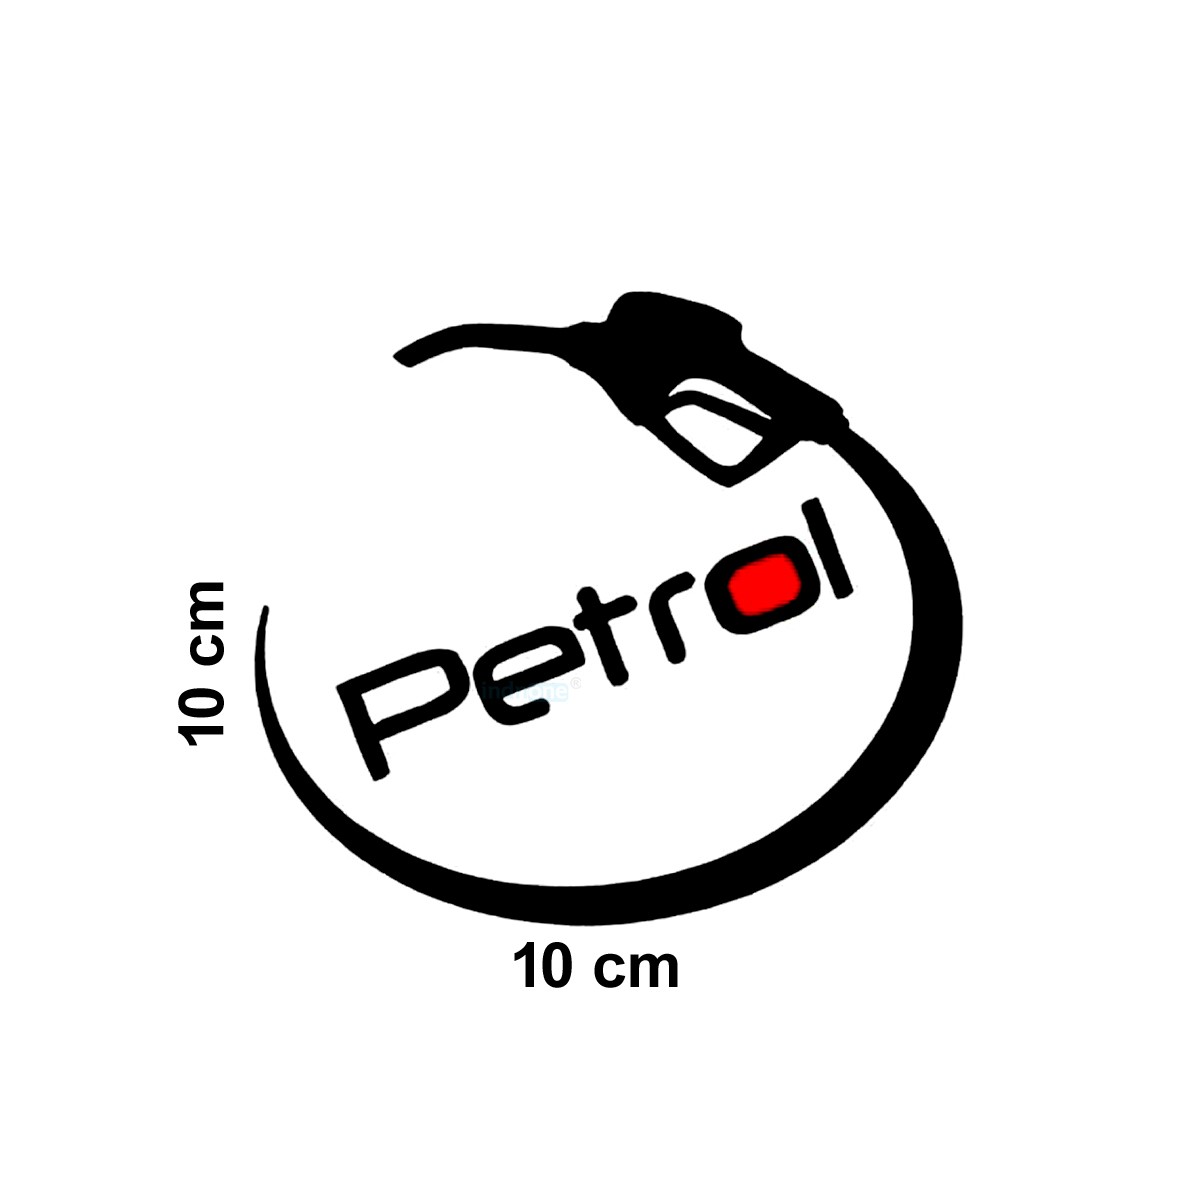 indnone® Paip Sticker Logo Sticker for Car. Car Sticker Stylish Fuel Lid |Black & Red Standard Size